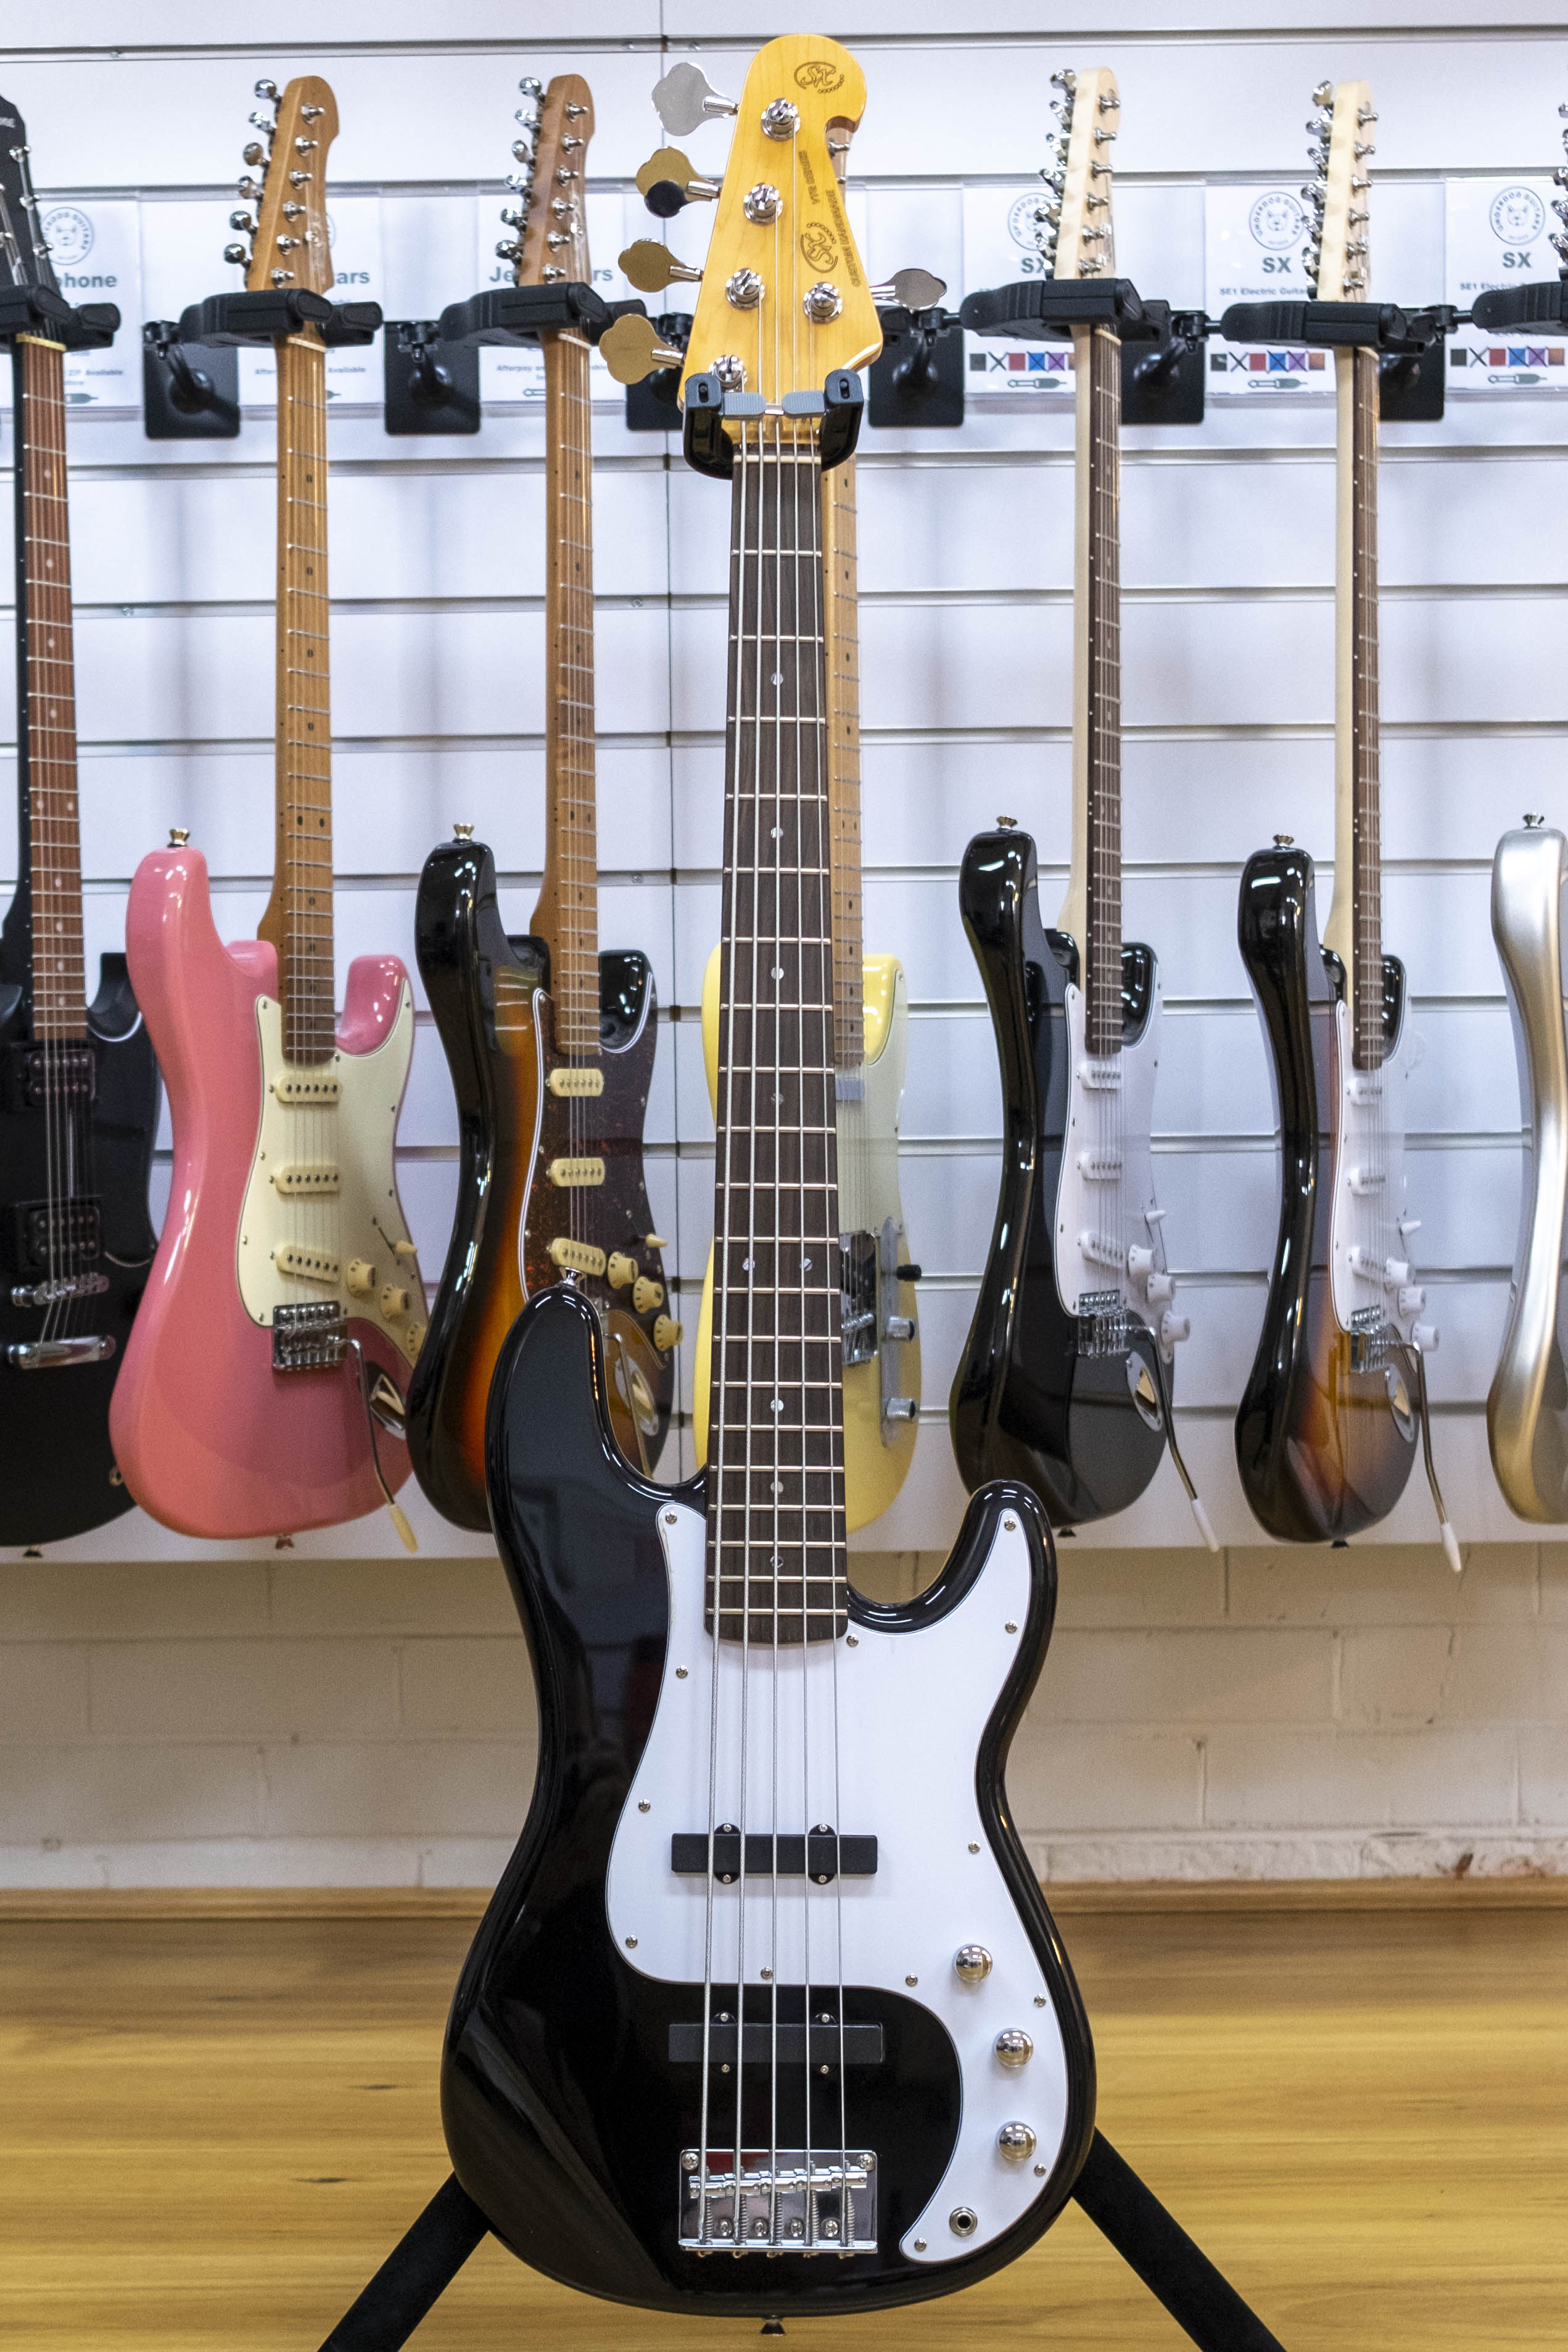 SX VTG Series 5-String Bass Guitar with Gig Bag (Black)